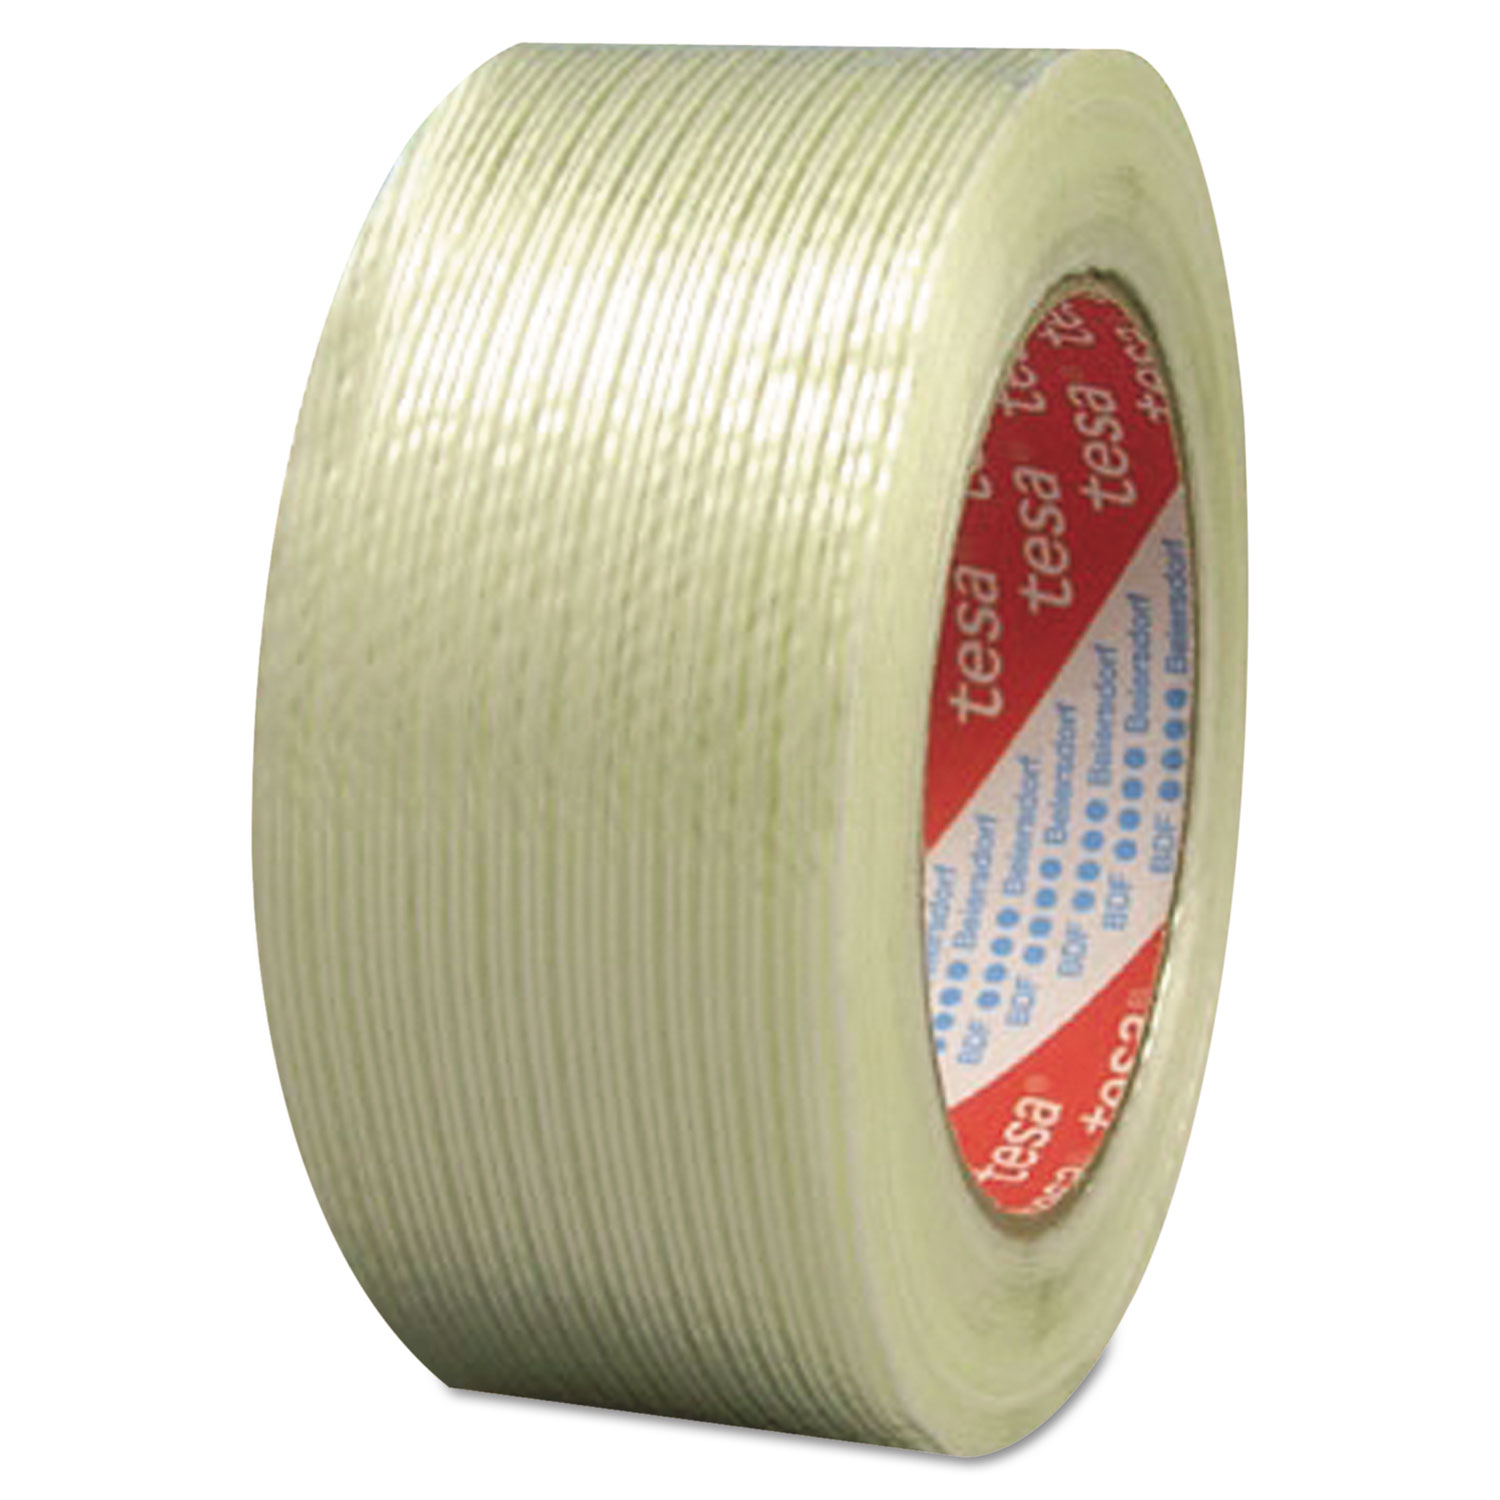 319 Performance Grade Filament Strapping Tape, 3/4 x 60yd, Fiberglass